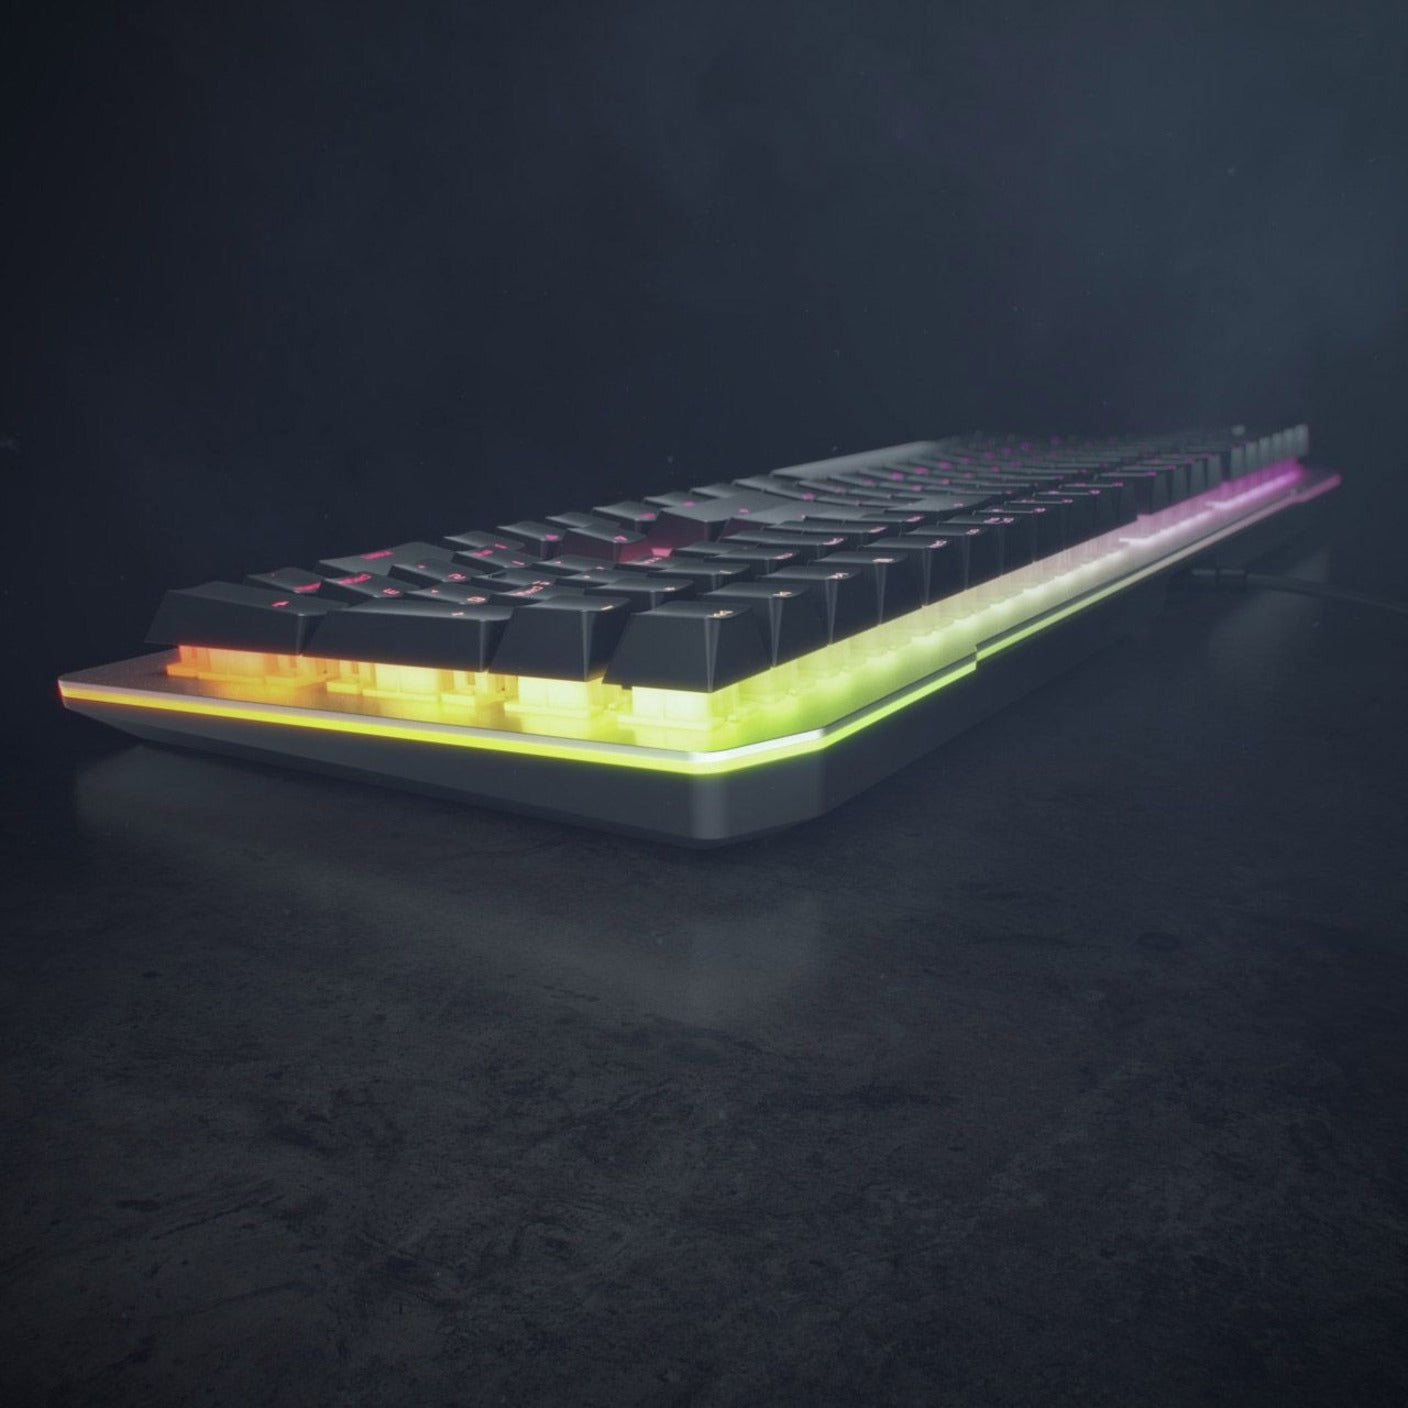 CHERRY G8B-26000LYAEU-2 MV 3.0 Mechanical Gaming Keyboard with CHERRY Viola Switches, RGB Backlight, Anti-ghosting